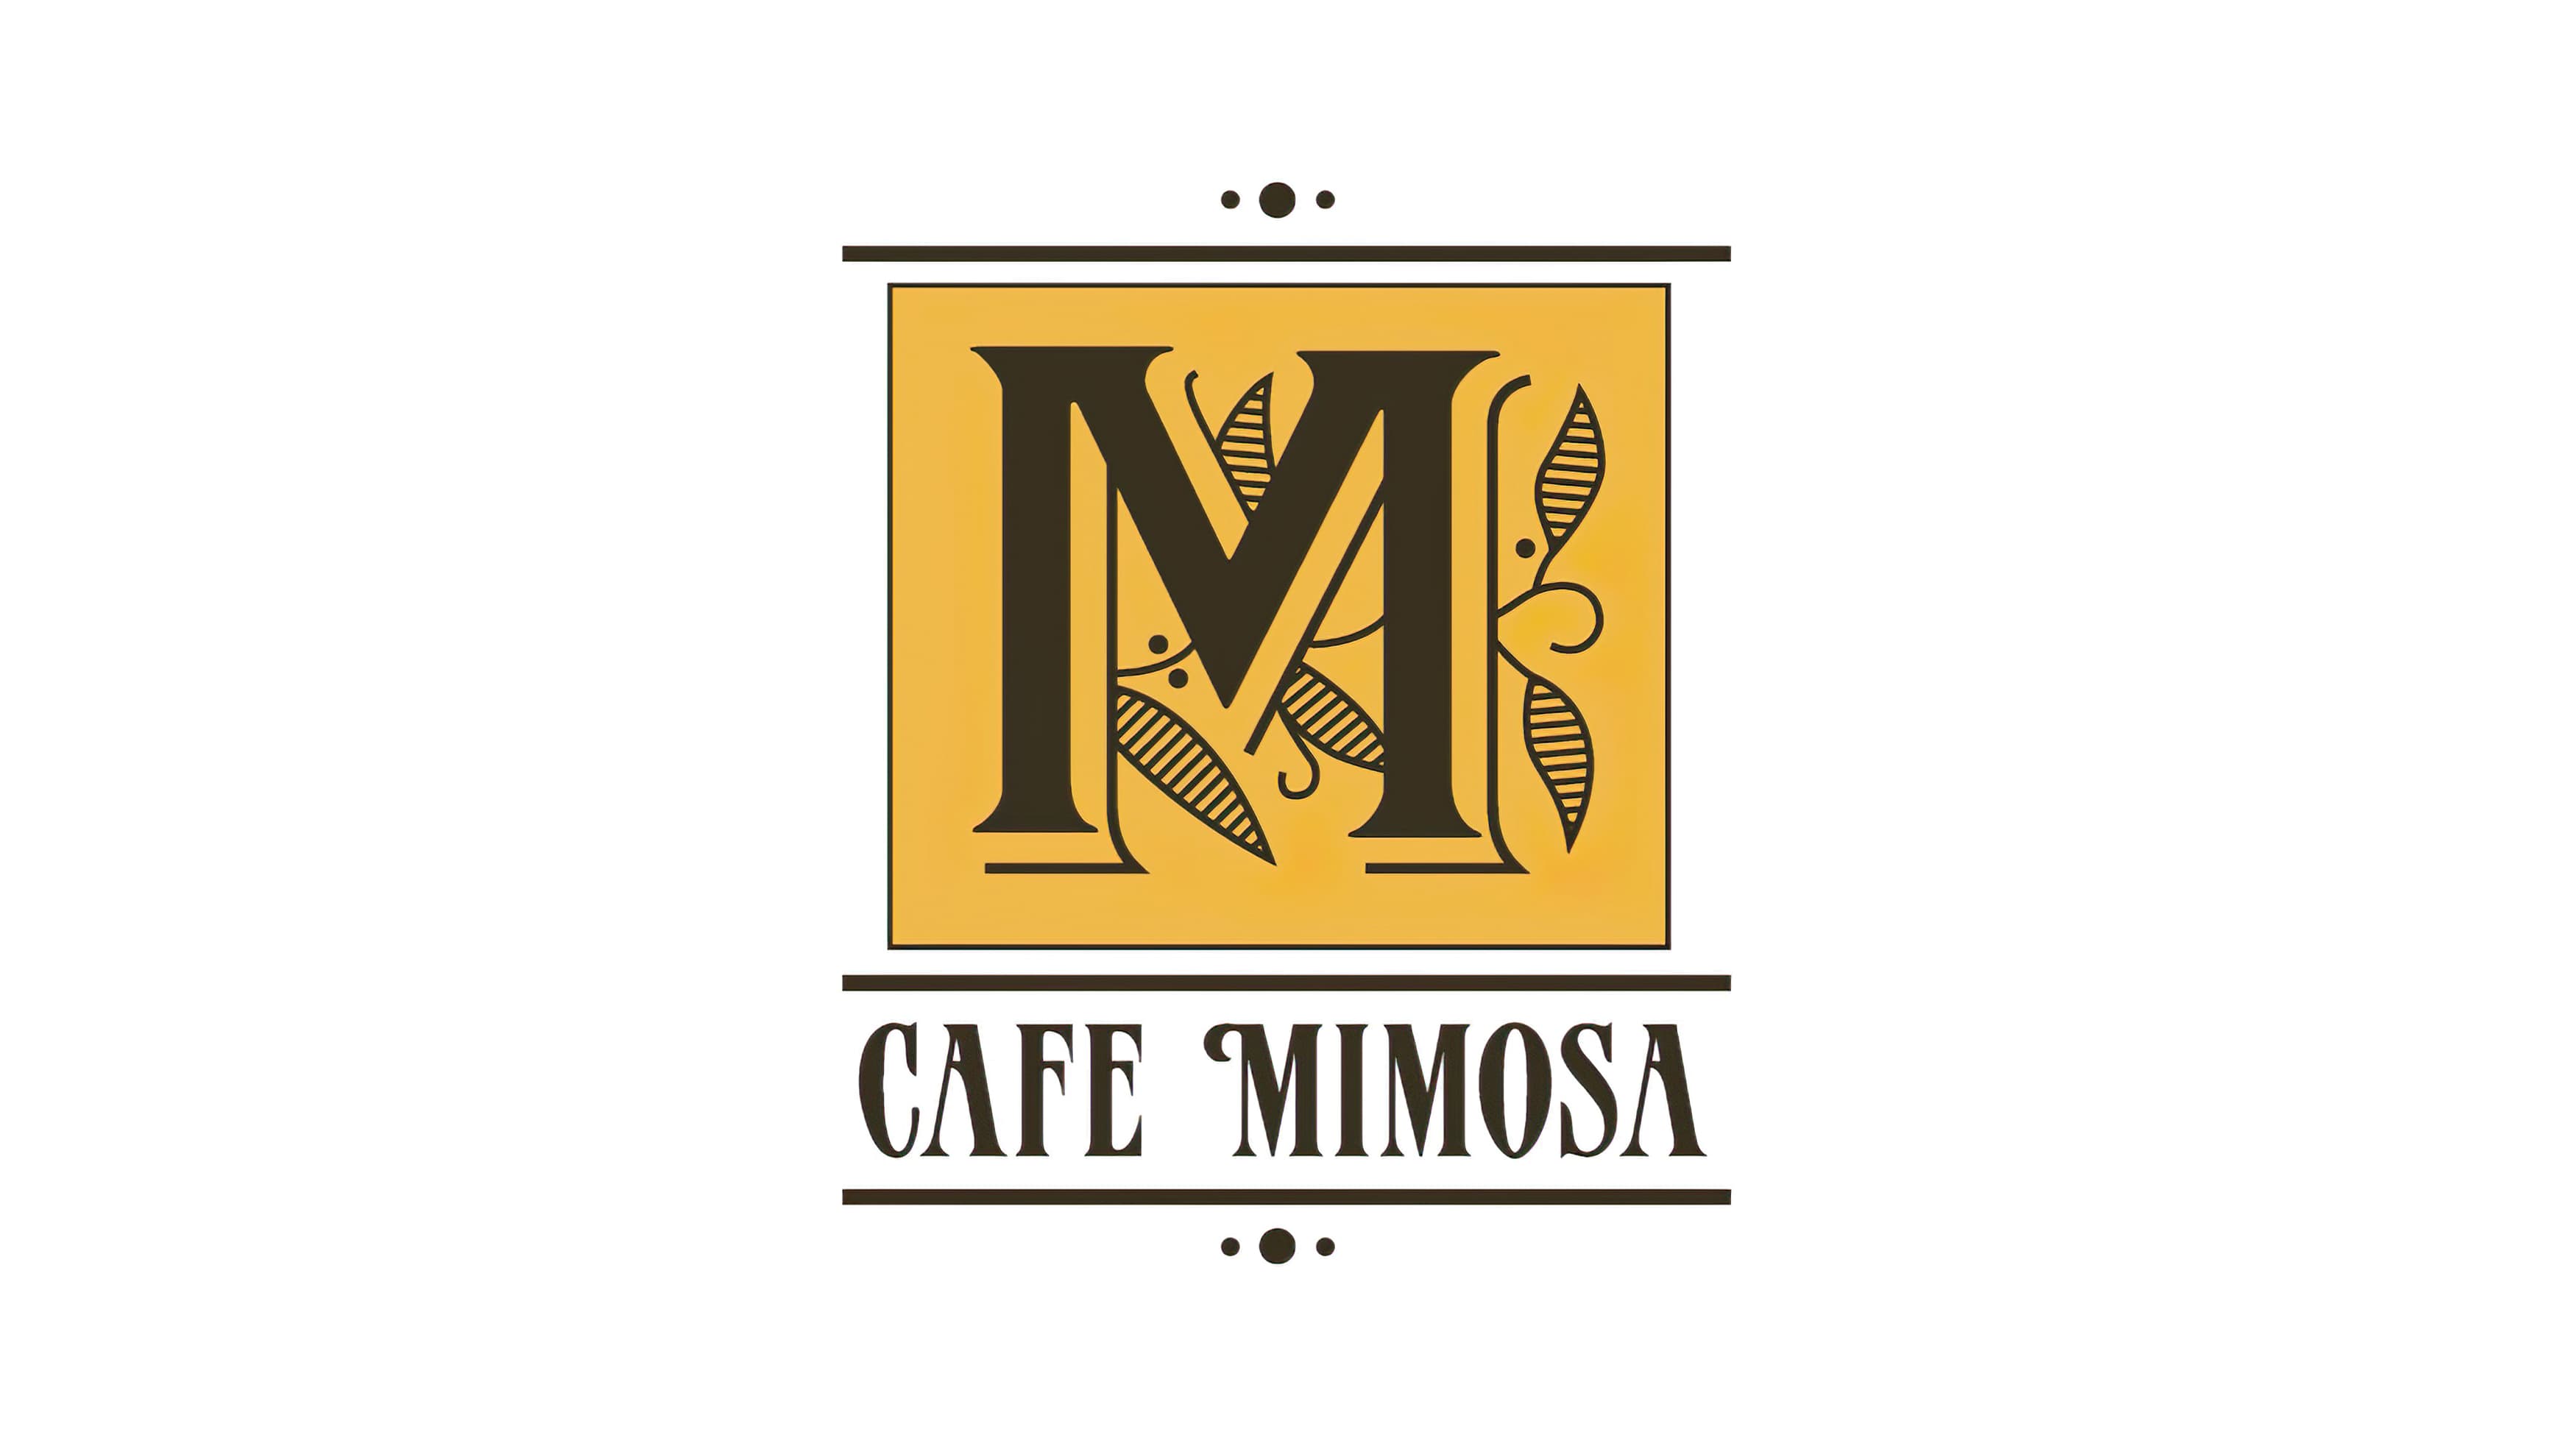 The Cafe Mimosa brand logo mark designed by RSSM Design